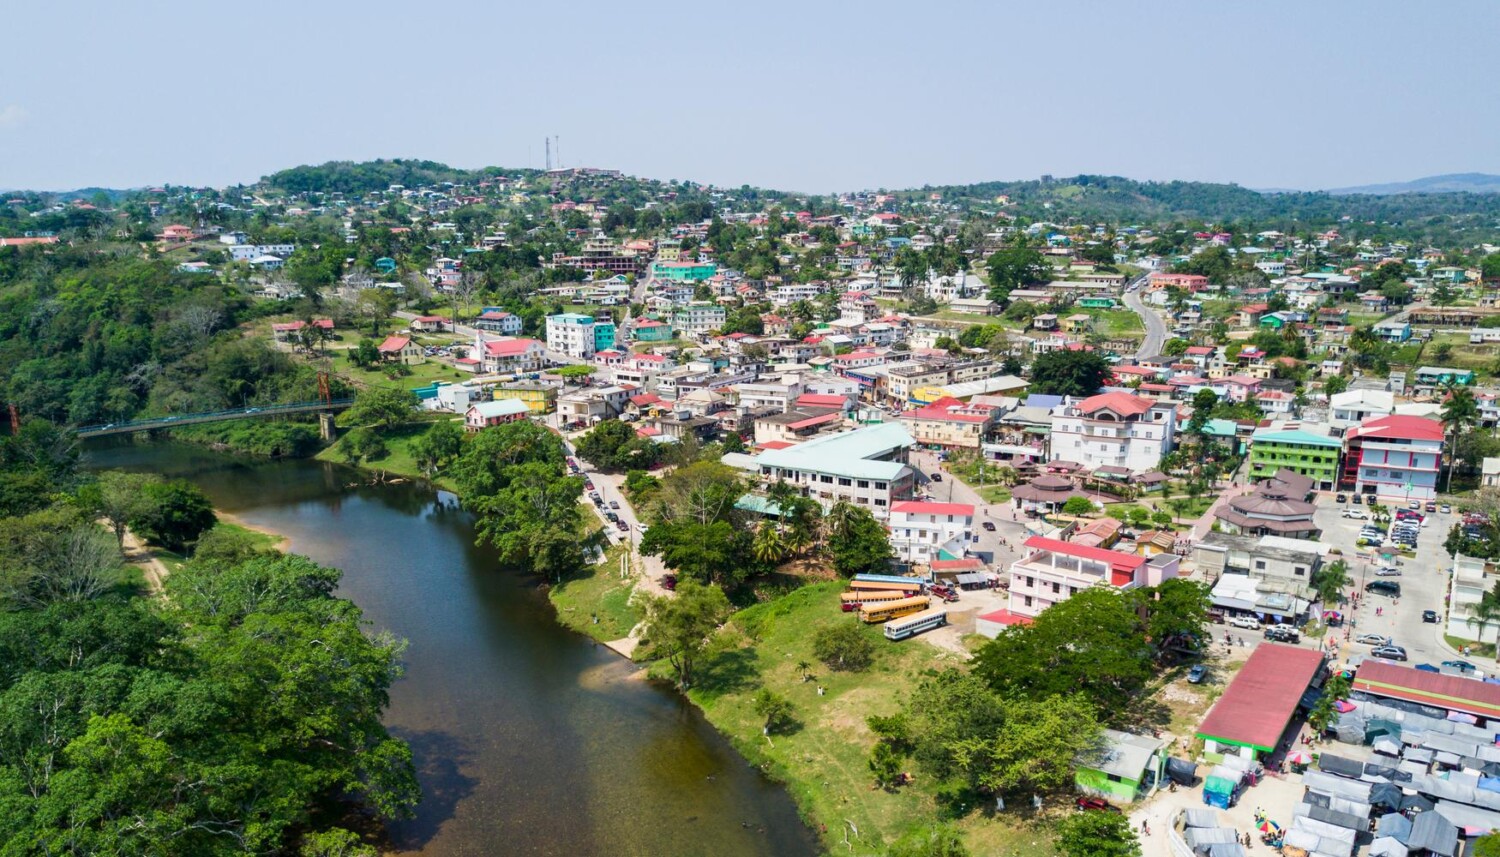 Is San Ignacio Belize worth visiting?